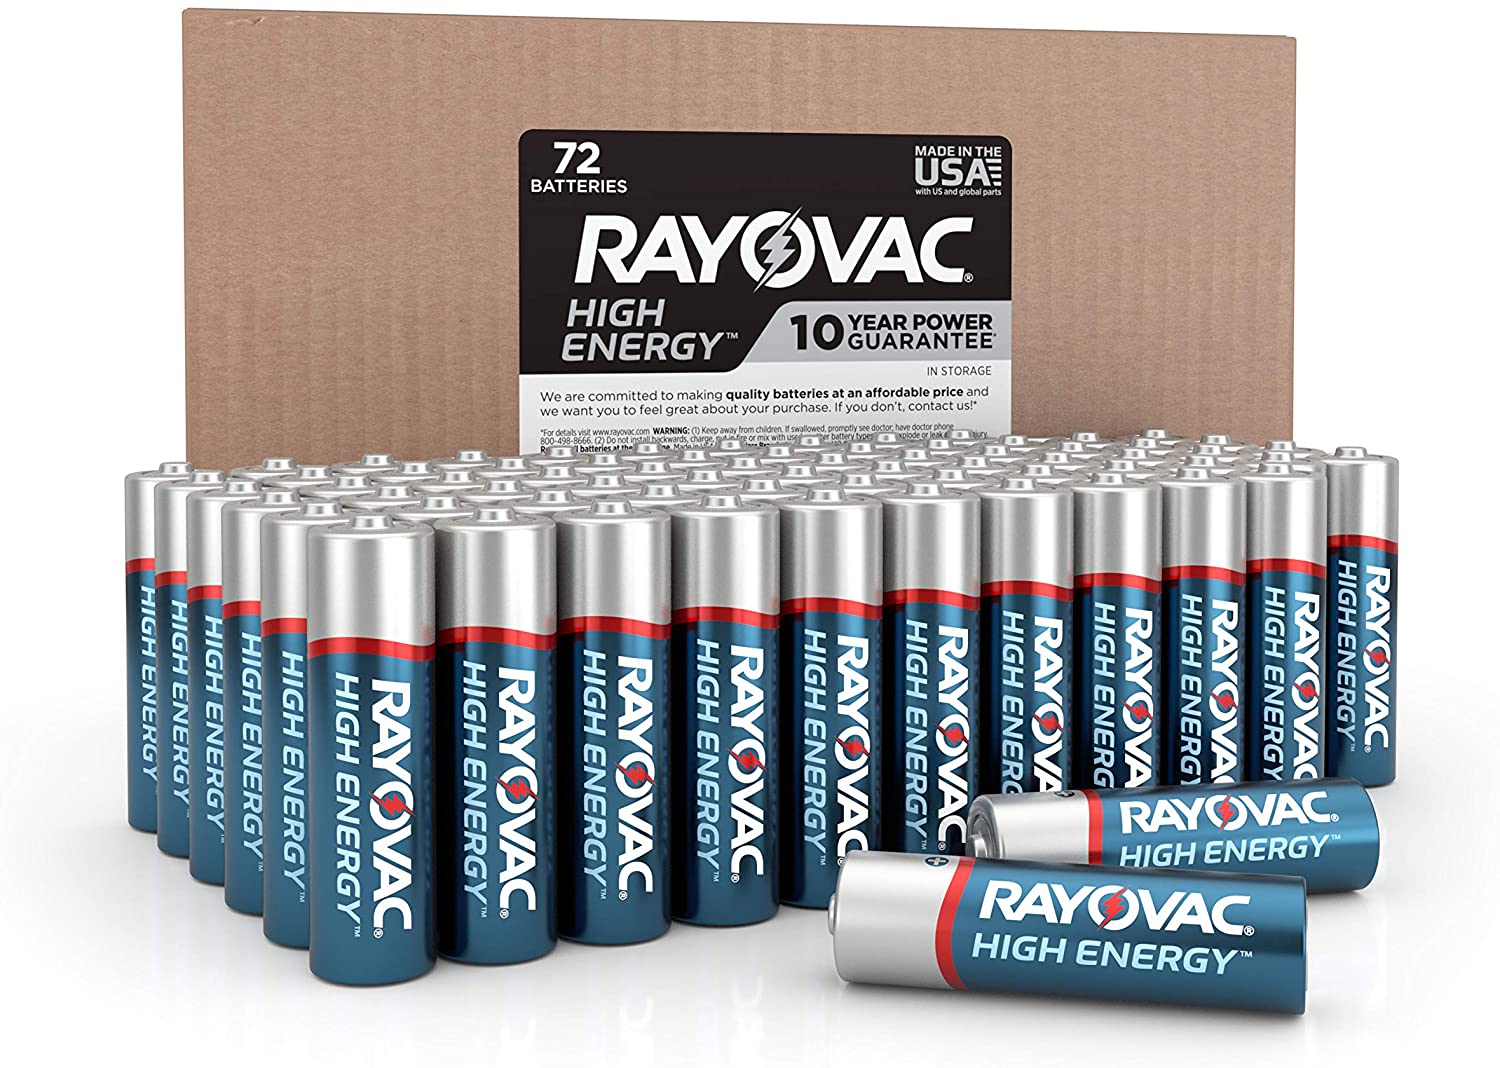 Rayovac Alkaline AA Batteries, 72-Count